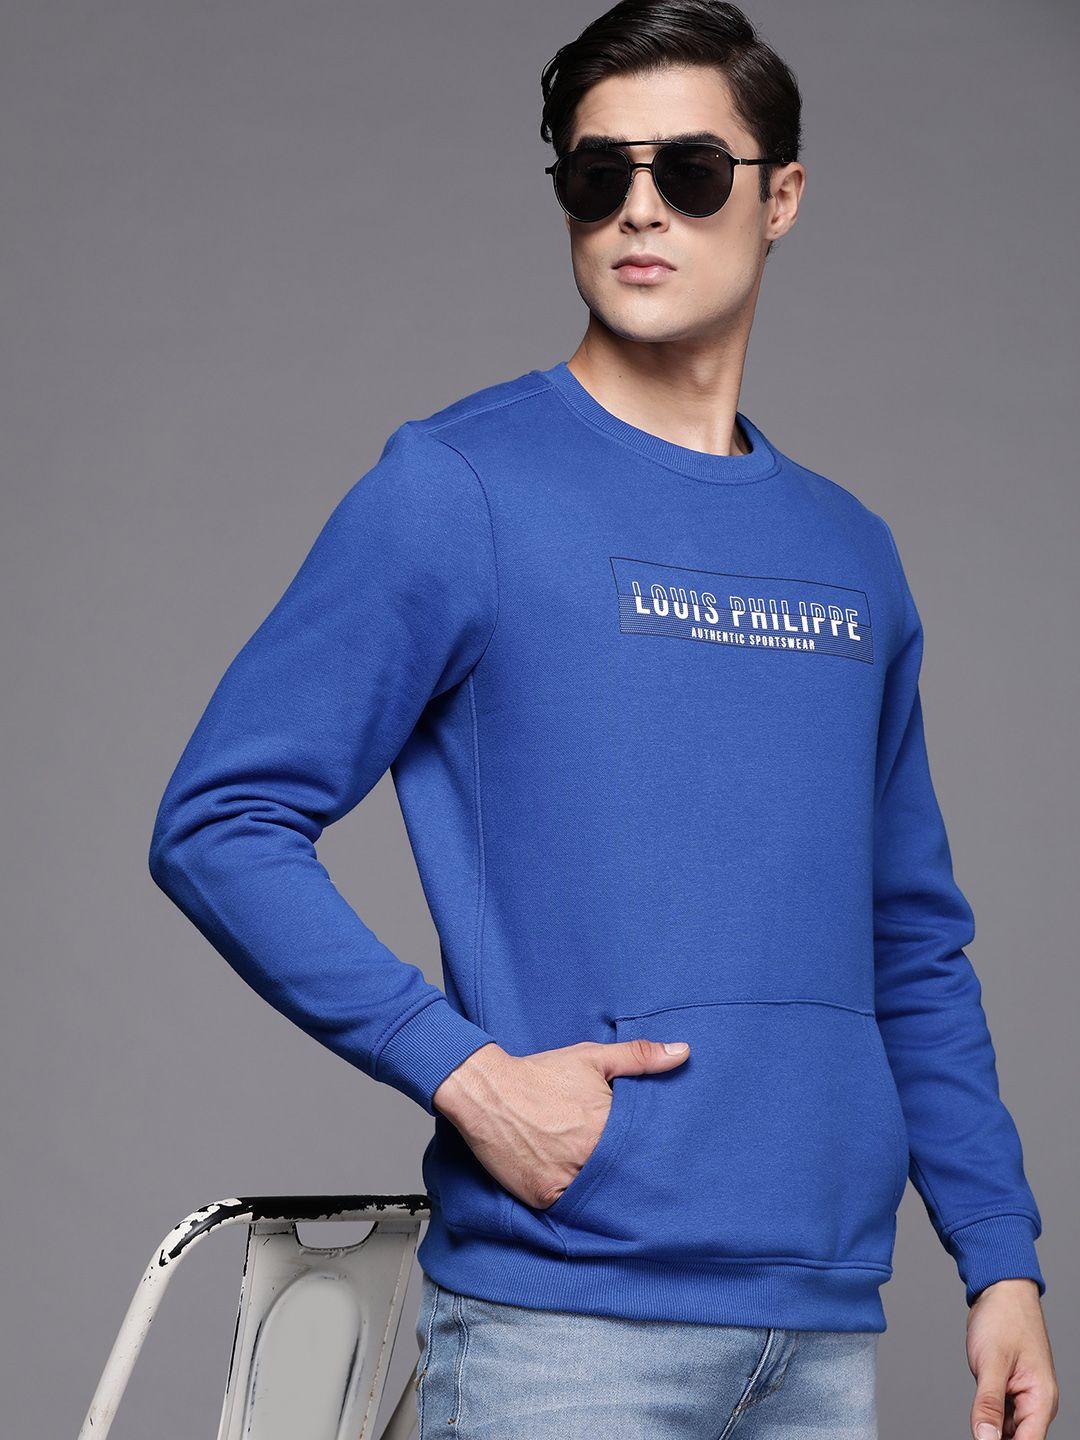 louis philippe sport men brand logo printed sweatshirt